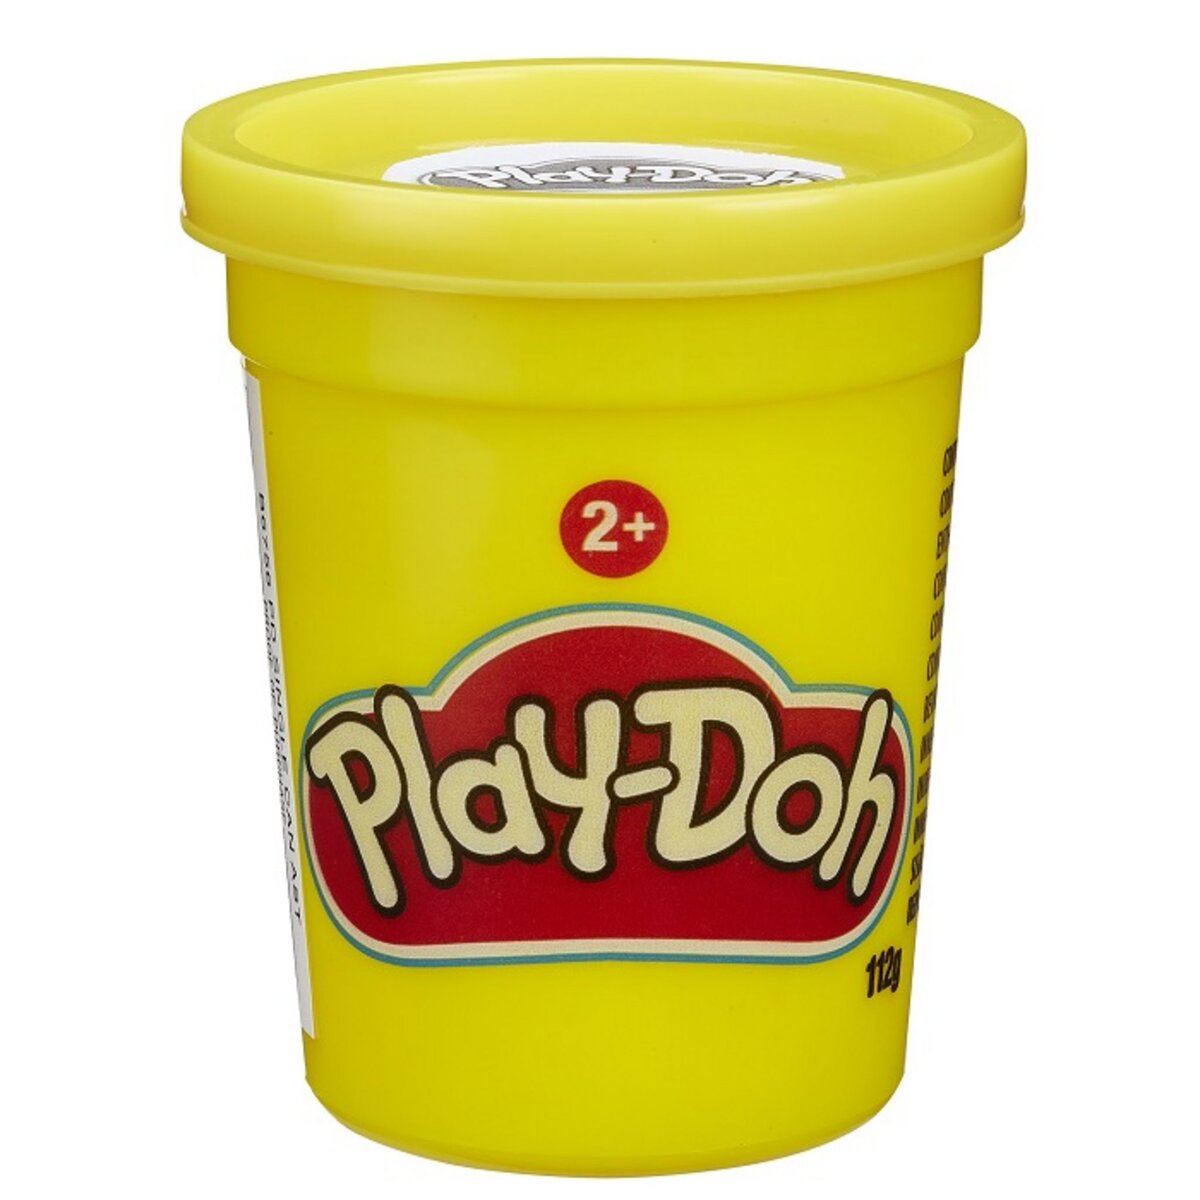 HASBRO Play-Doh - Mon Premier Kit de pâte à modeler Play-Doh en